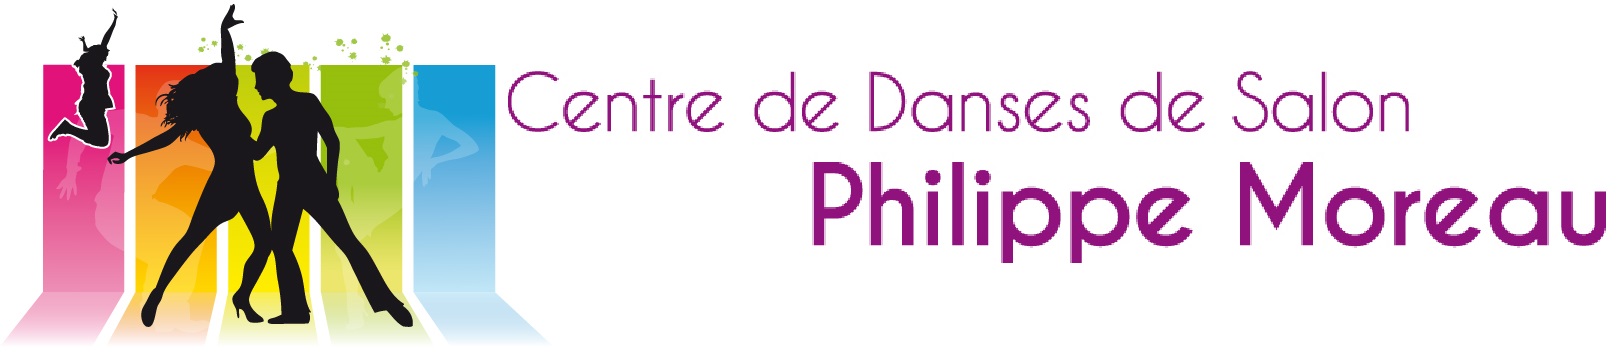 Ecole de danse Philippe Moreau